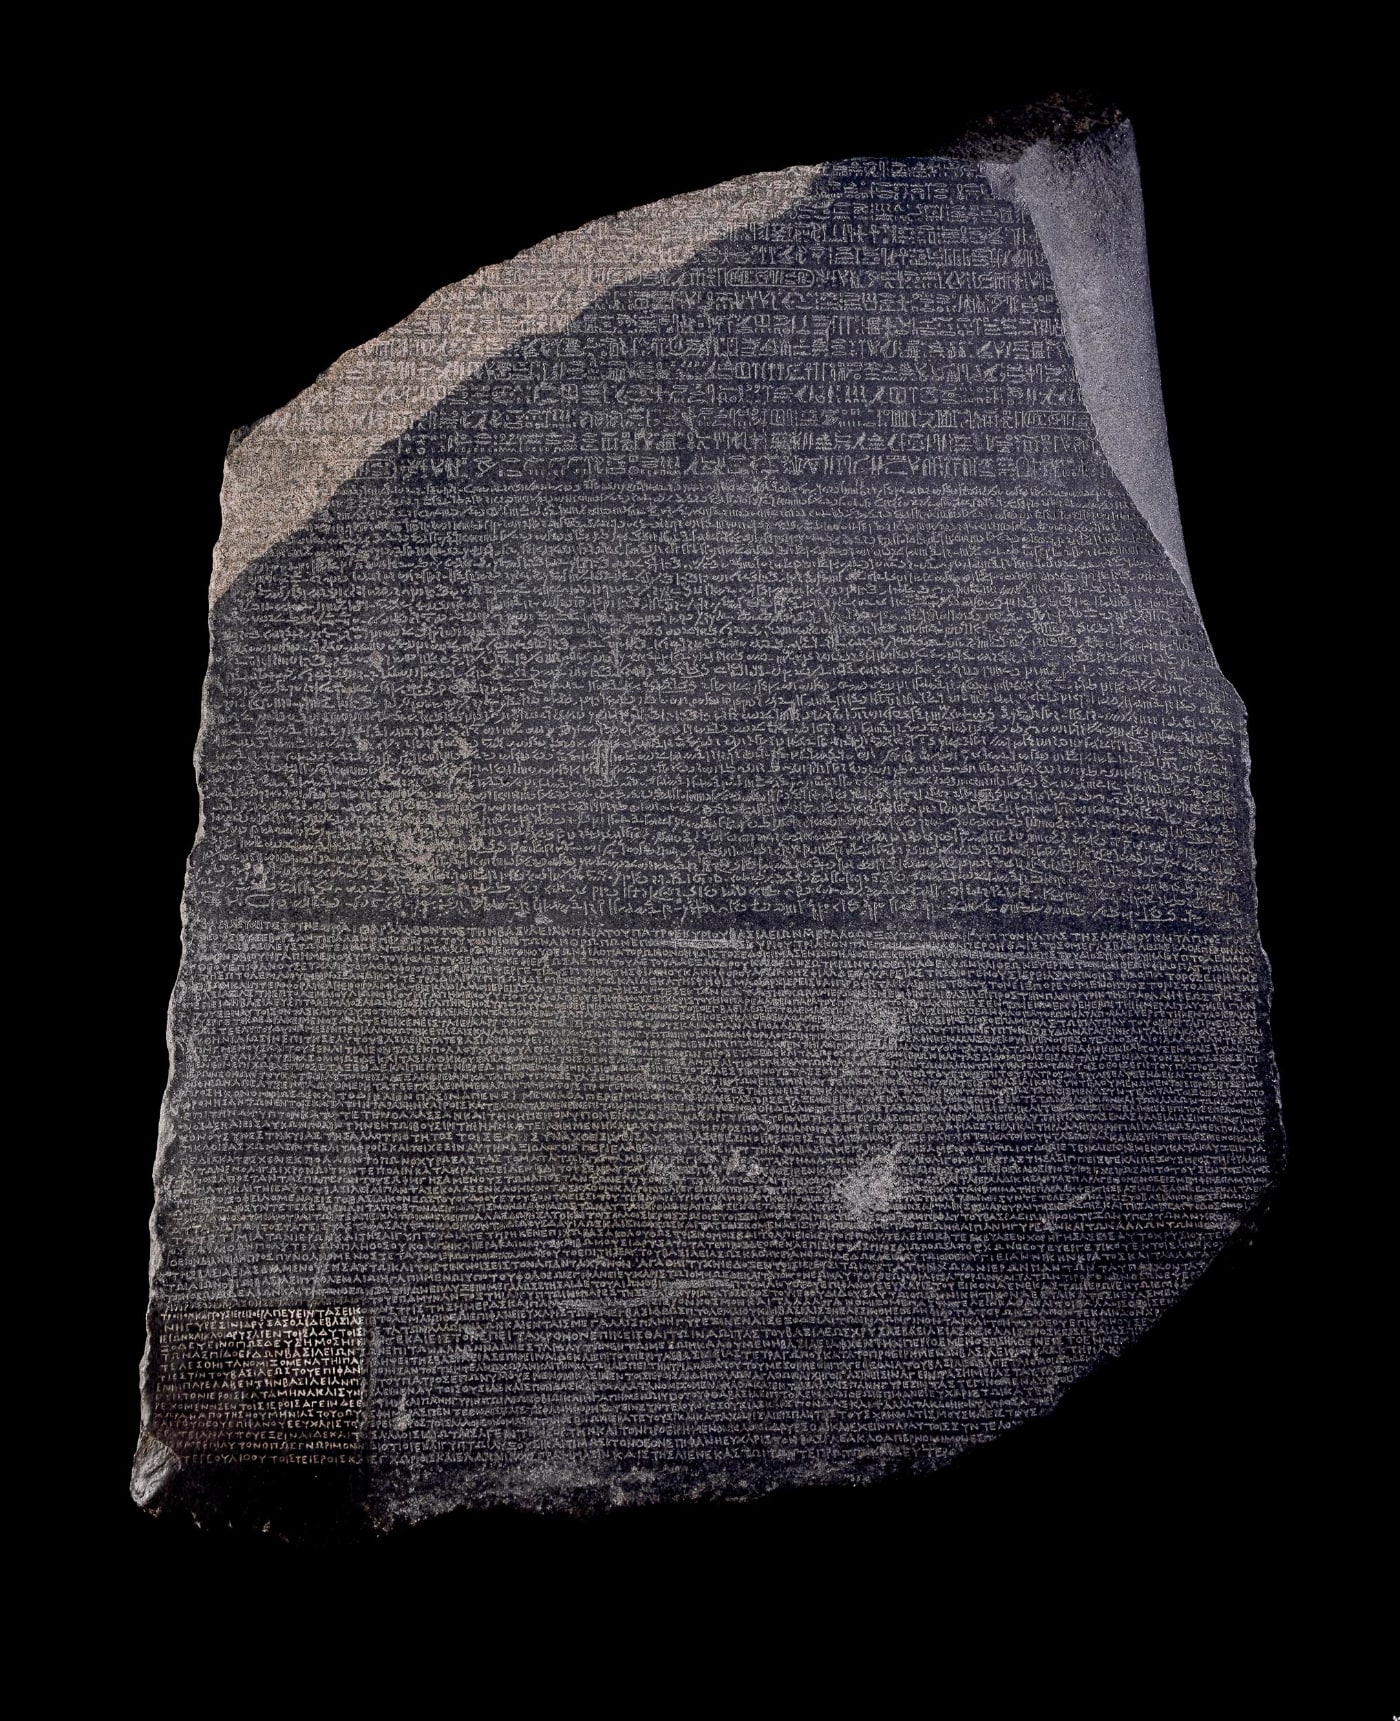 La piedra Rosetta.